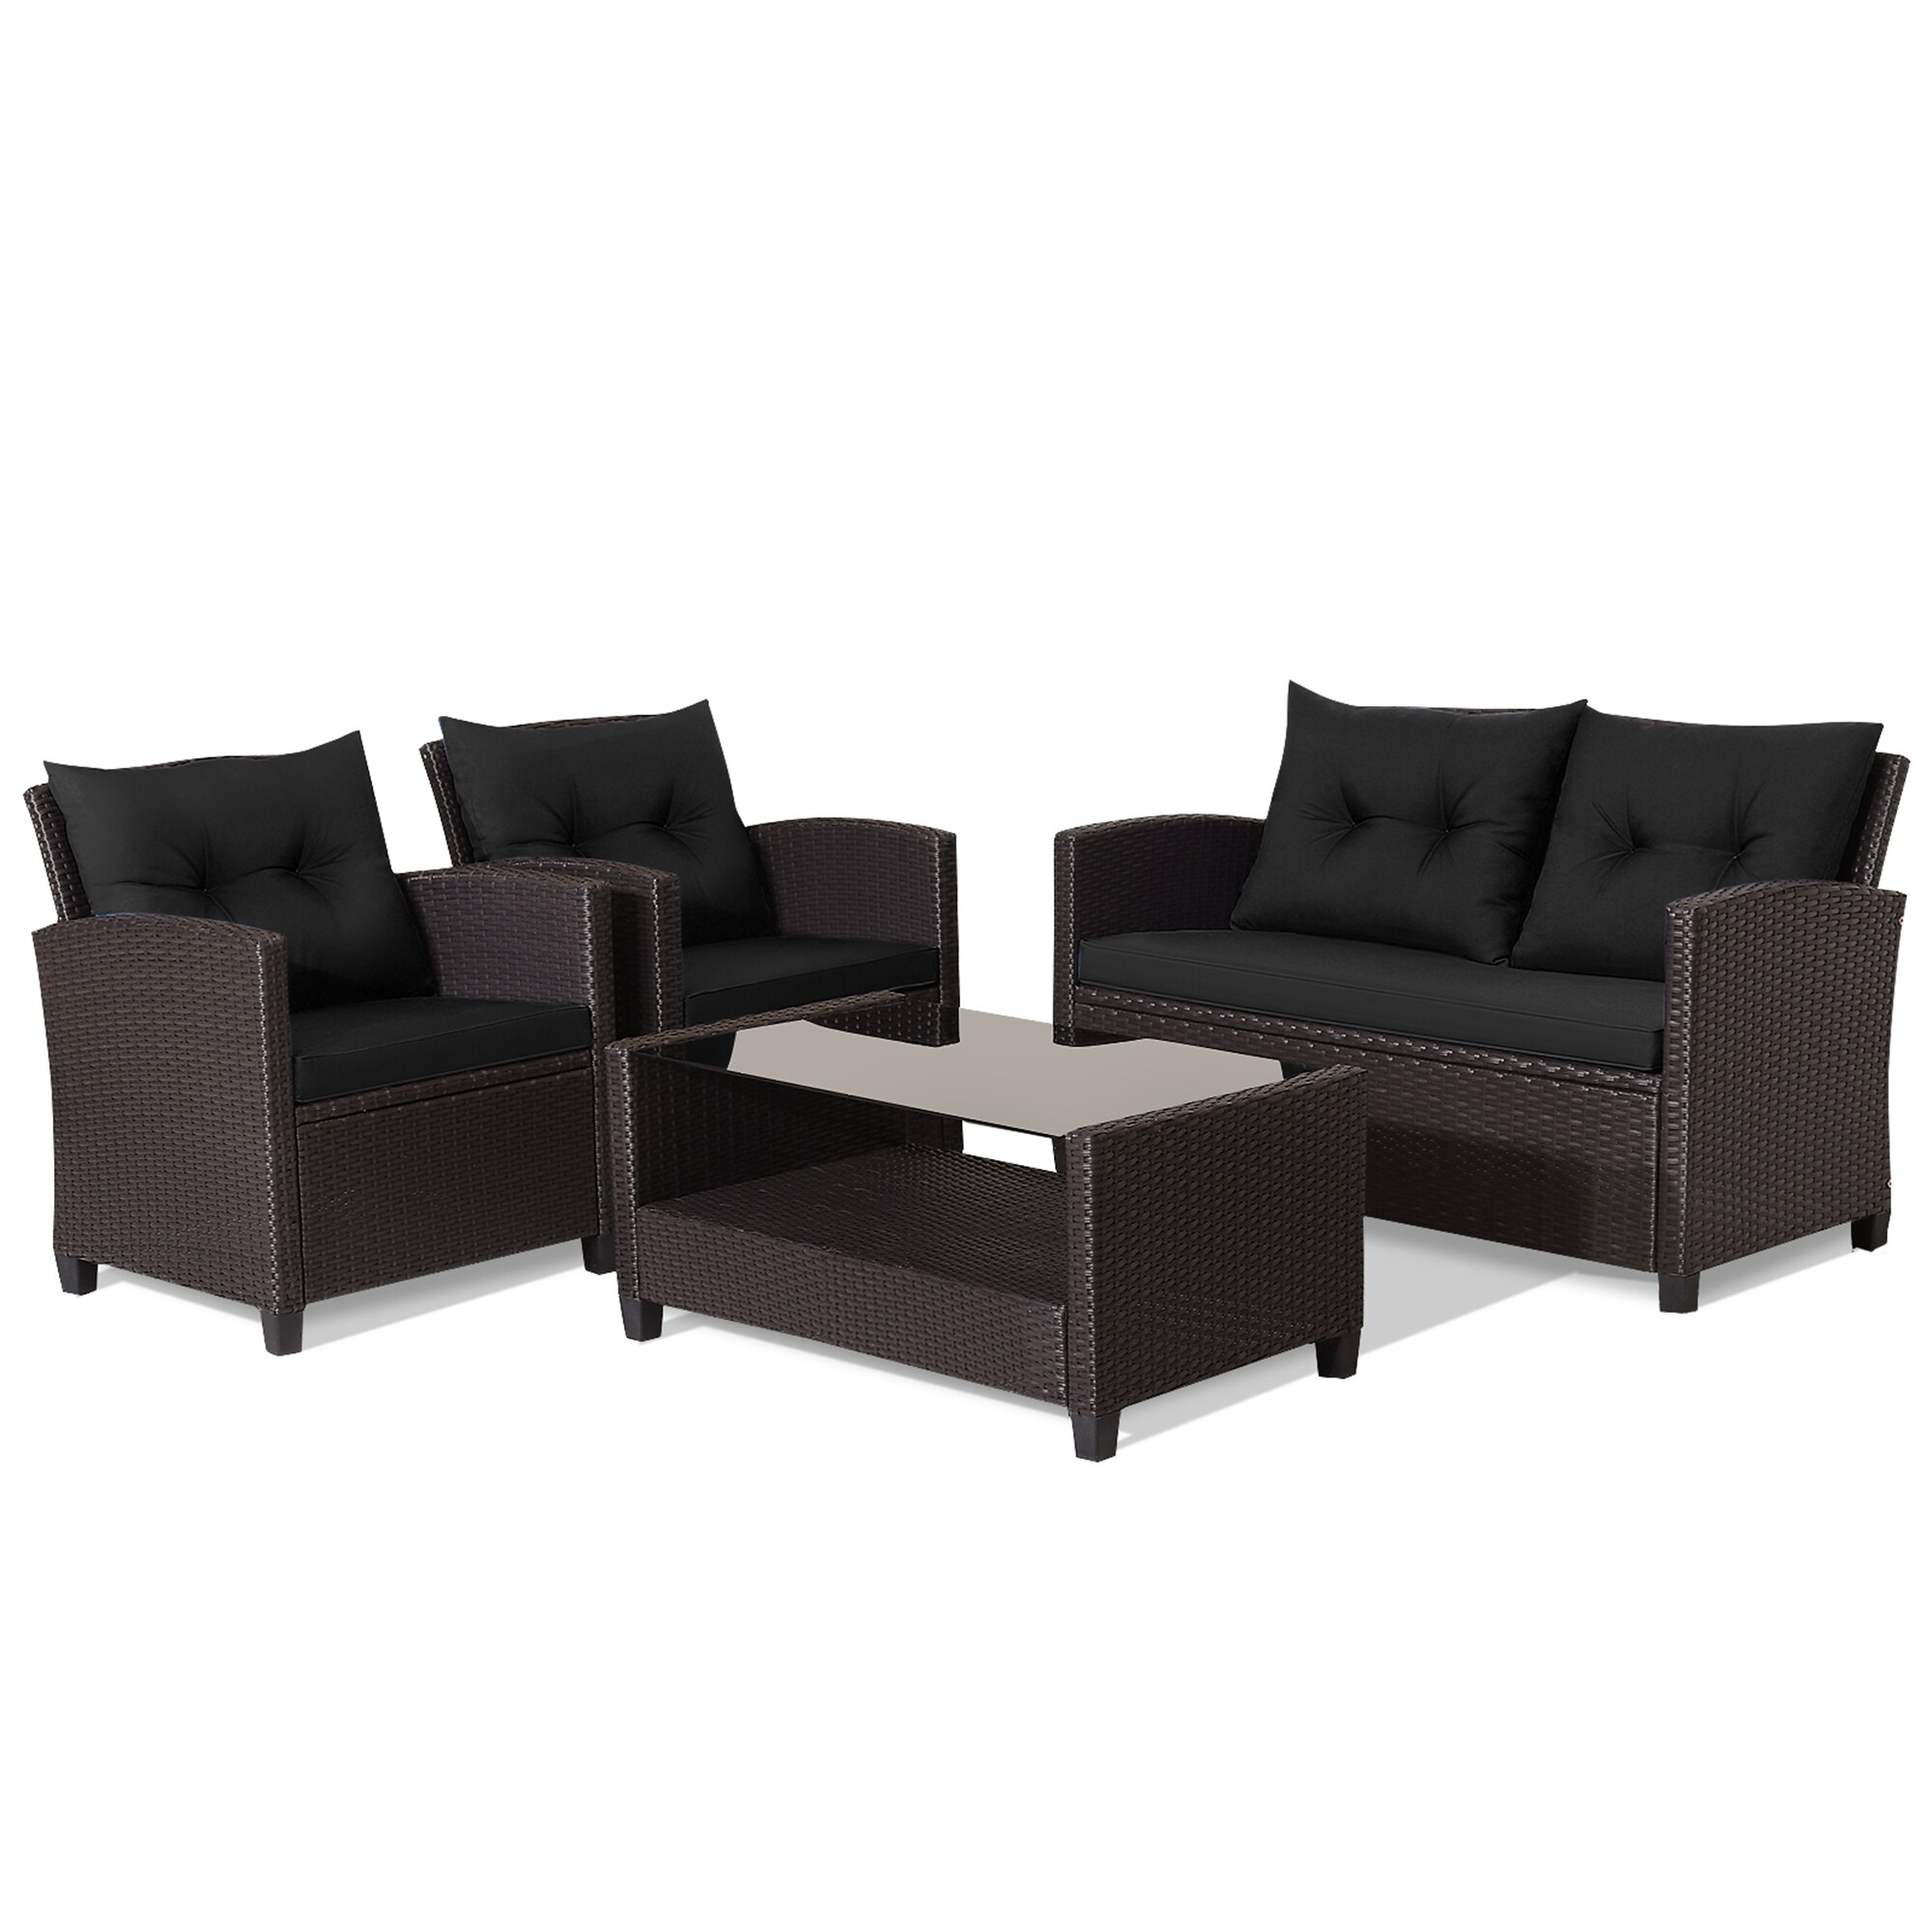 4pcs Outdoor Rattan Conversation Set Patio Furniture Set With Cushions